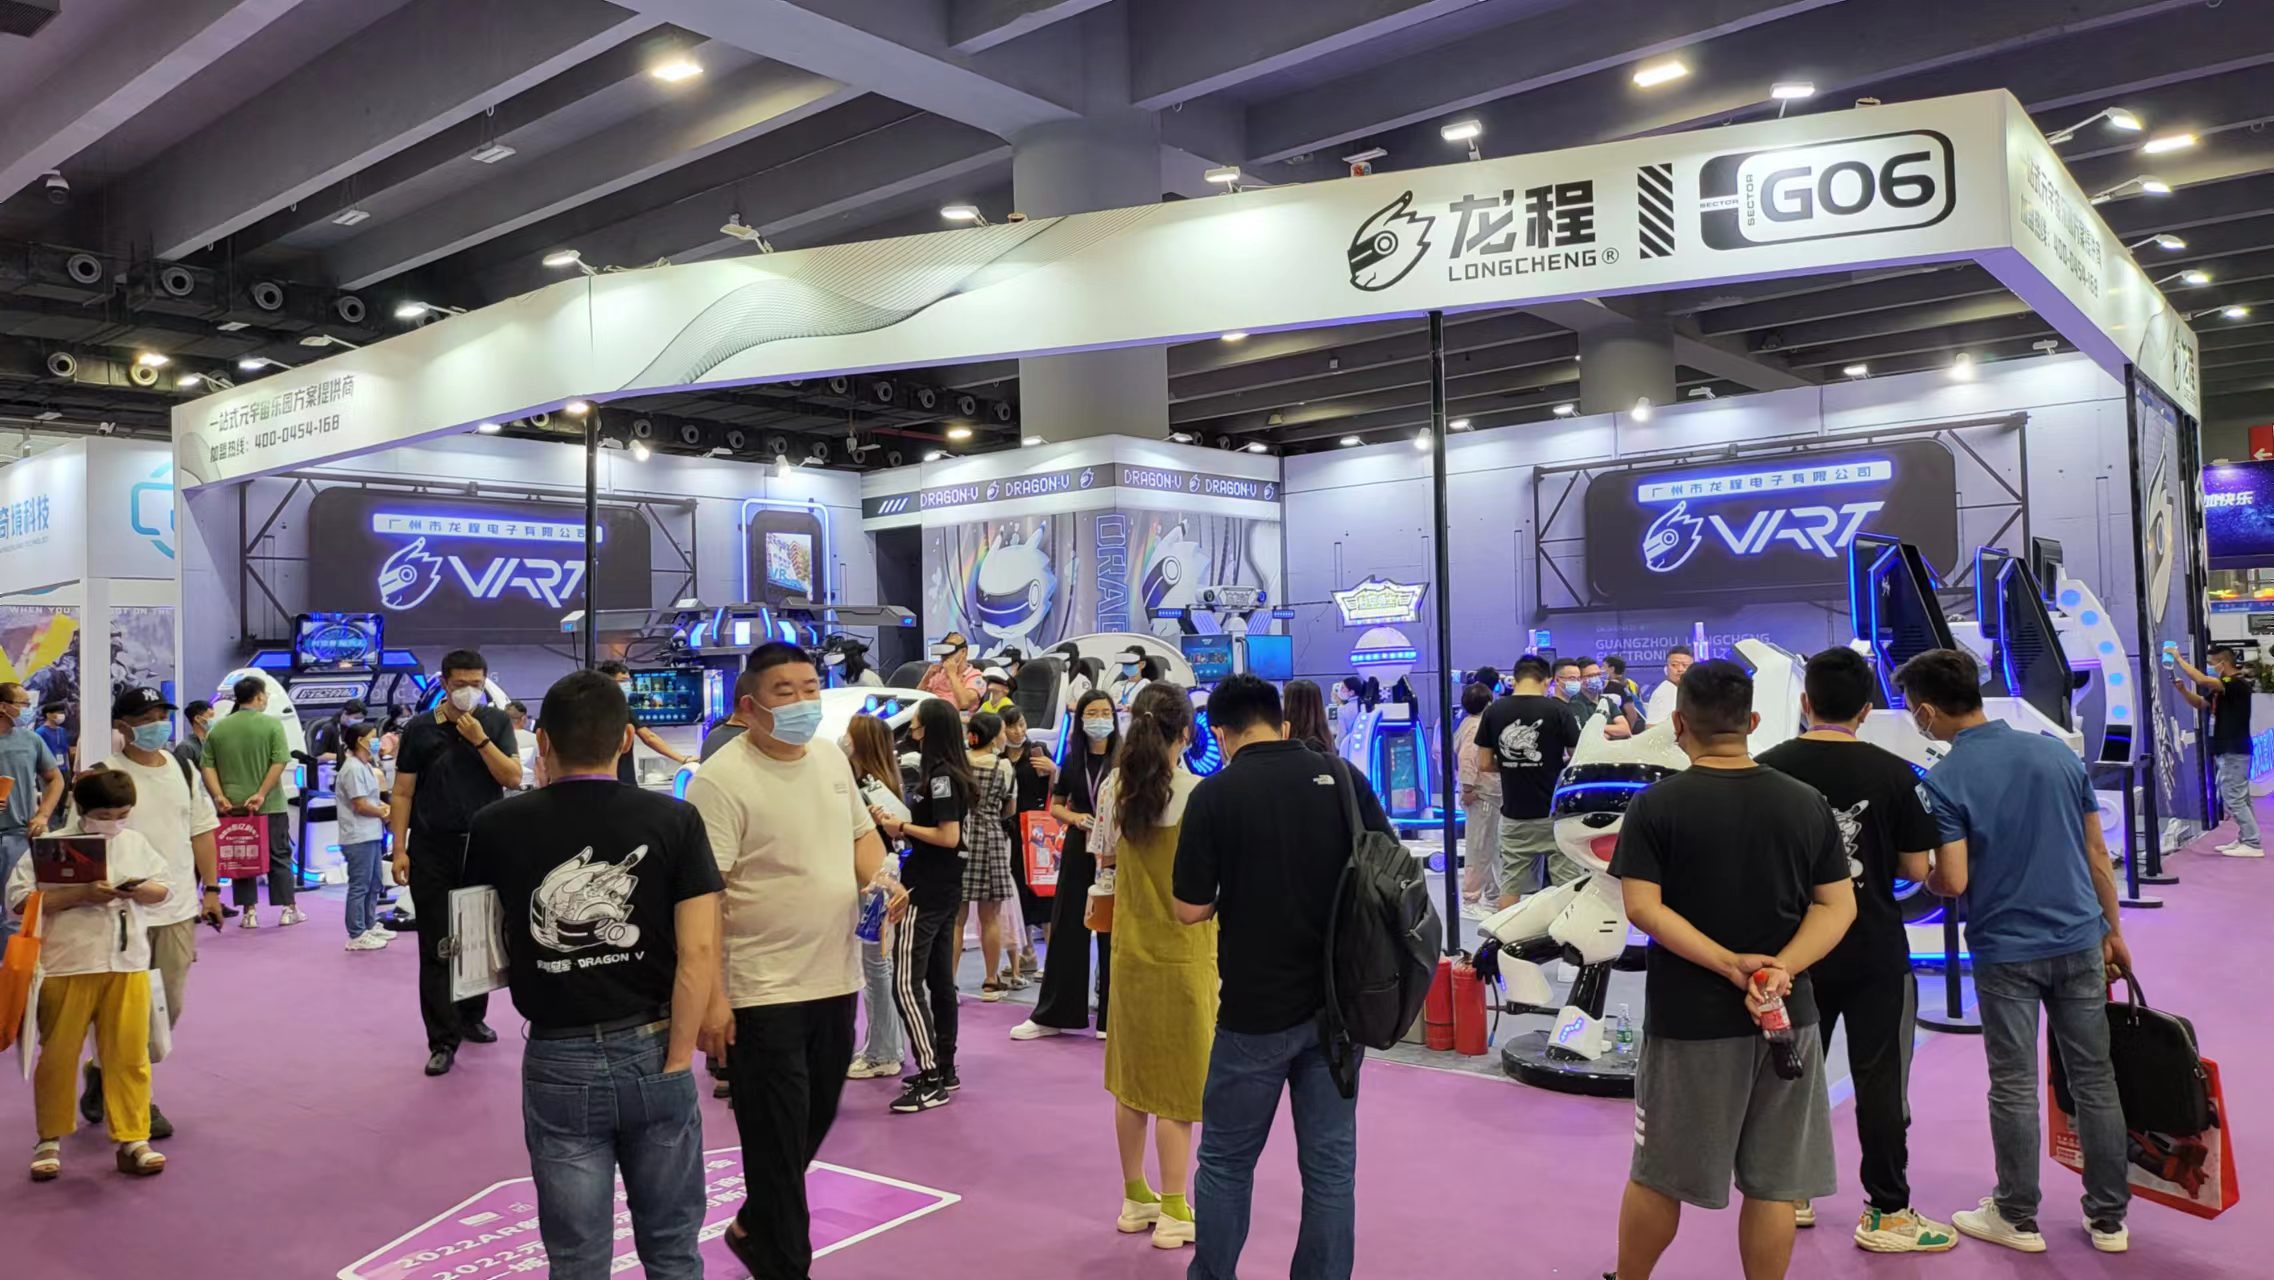 VART VR |Guangzhou Metaverse Exhibition Booth G06 ເປັນທີ່ນິຍົມແທ້ໆ